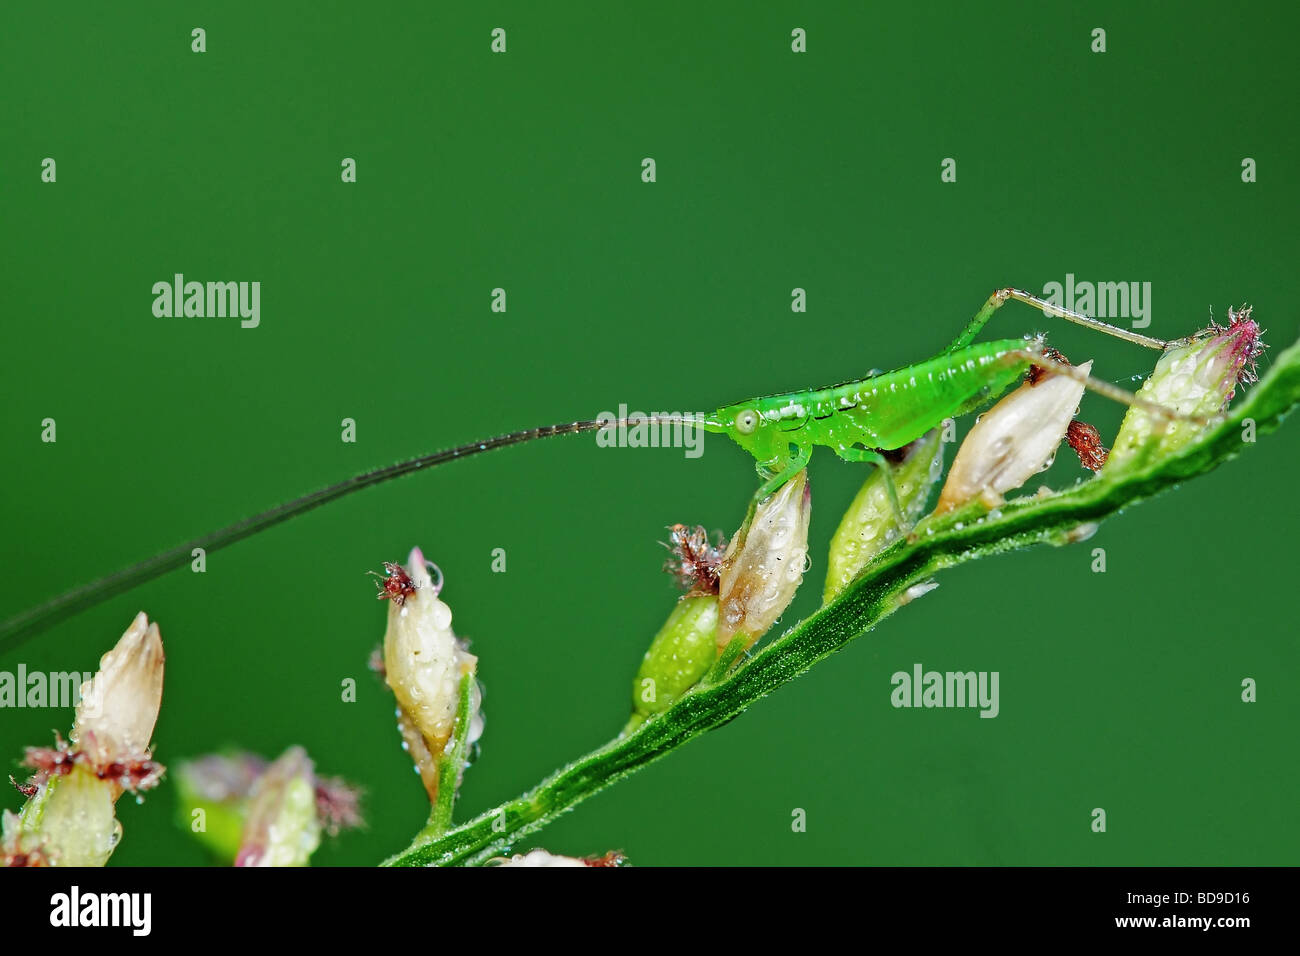 grasshopper in the parks Stock Photo